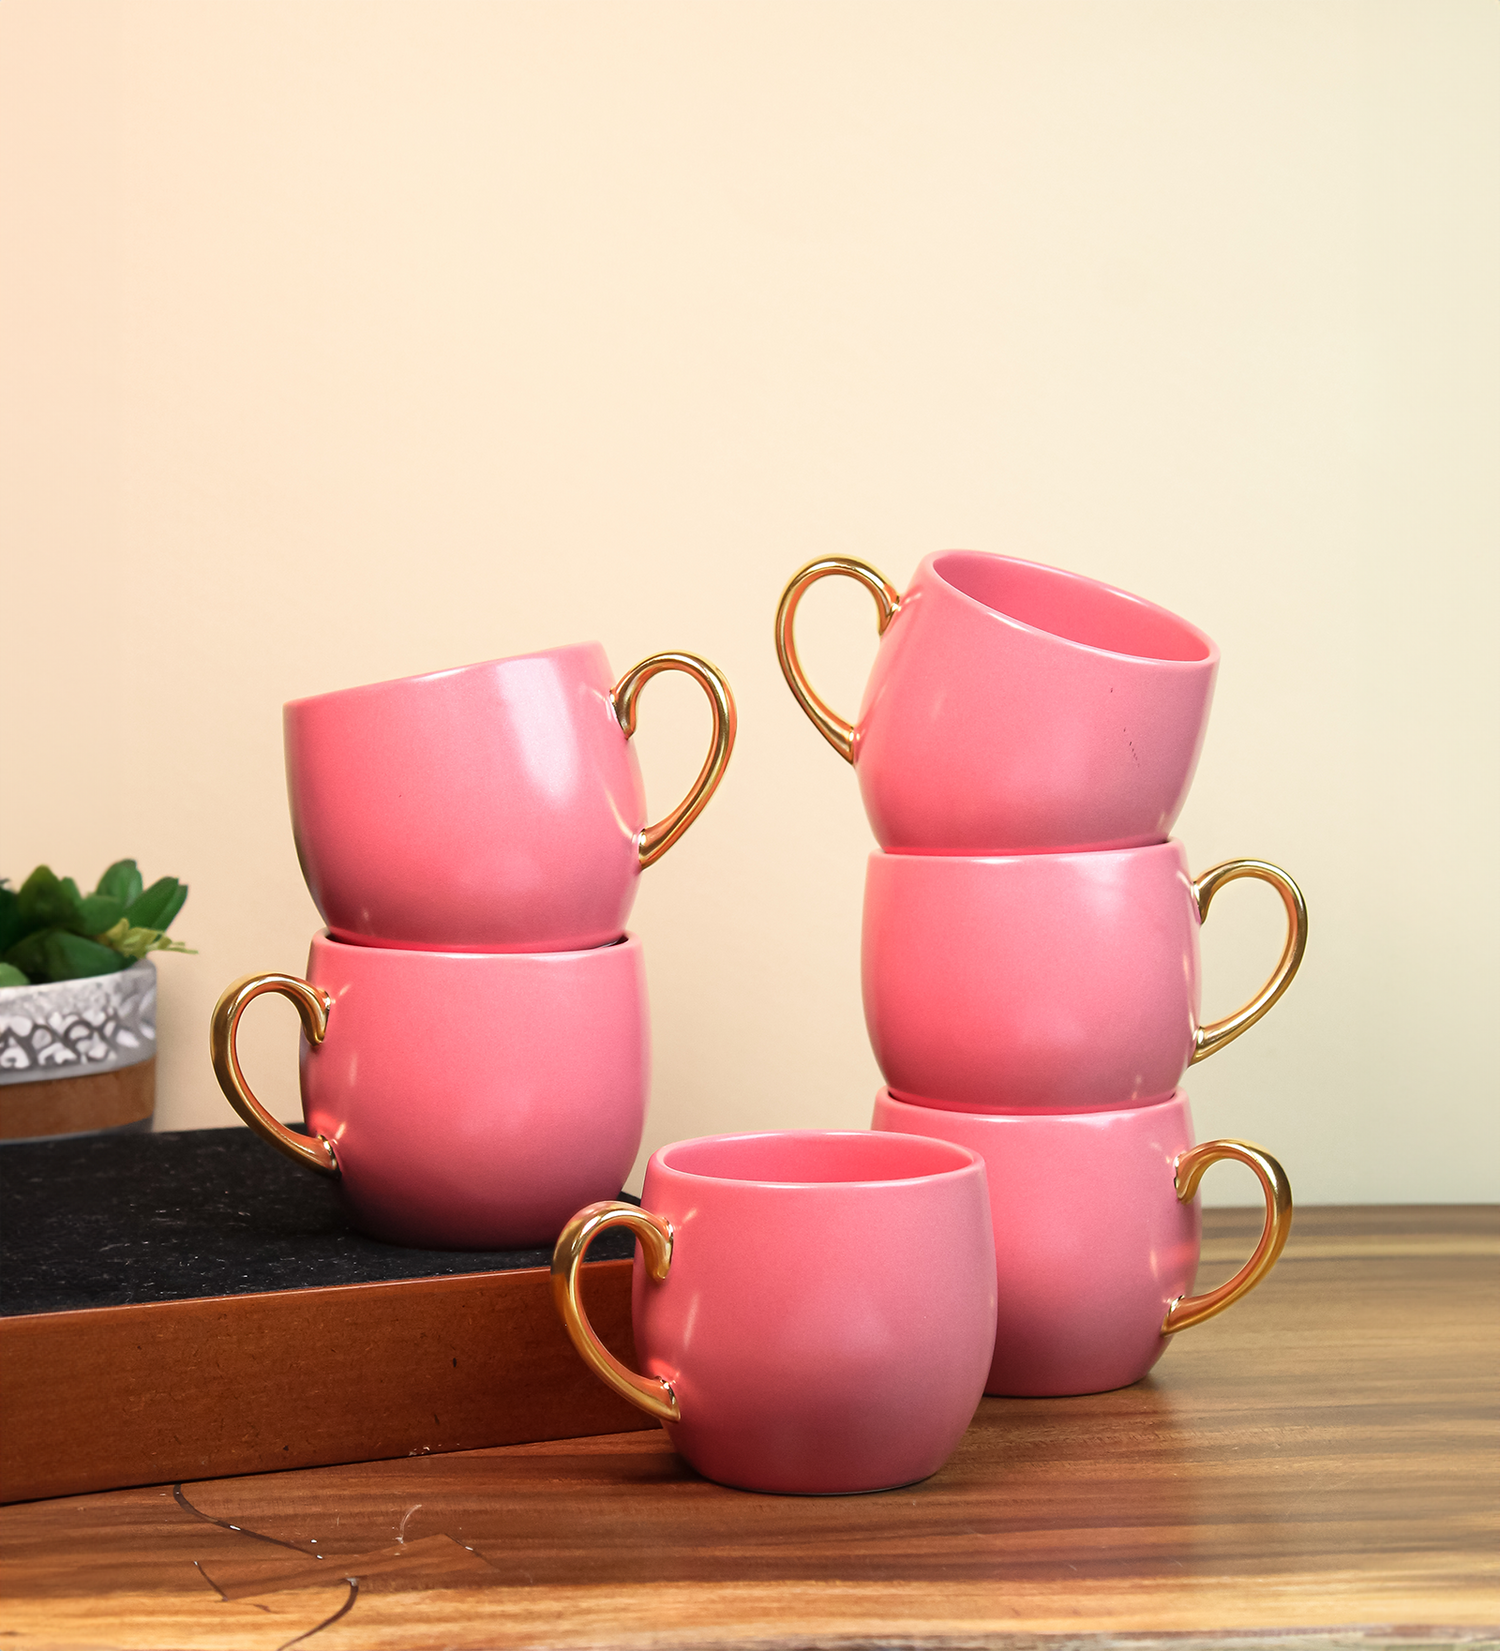 Bloom luxurious Tea Mug | Golden handle